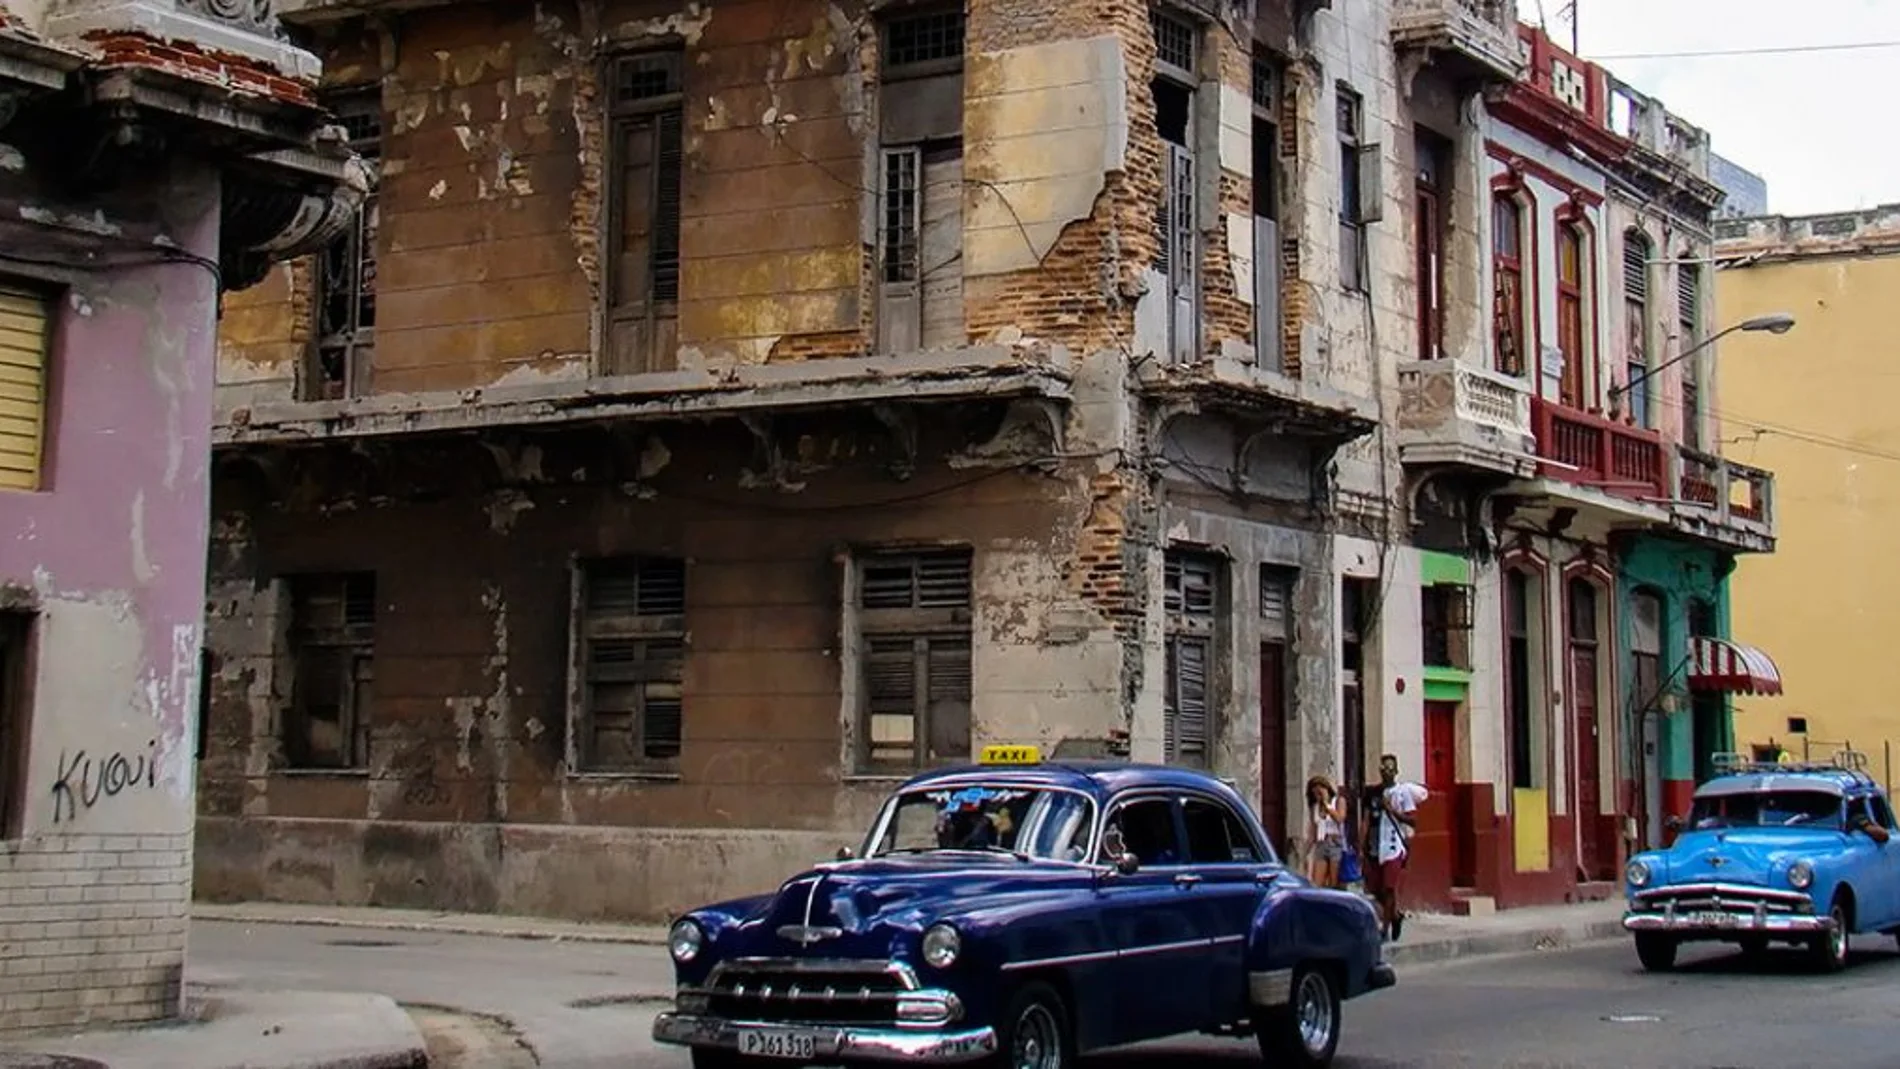 Así luce La Habana, Cuba, después de tres décadas de socialismo